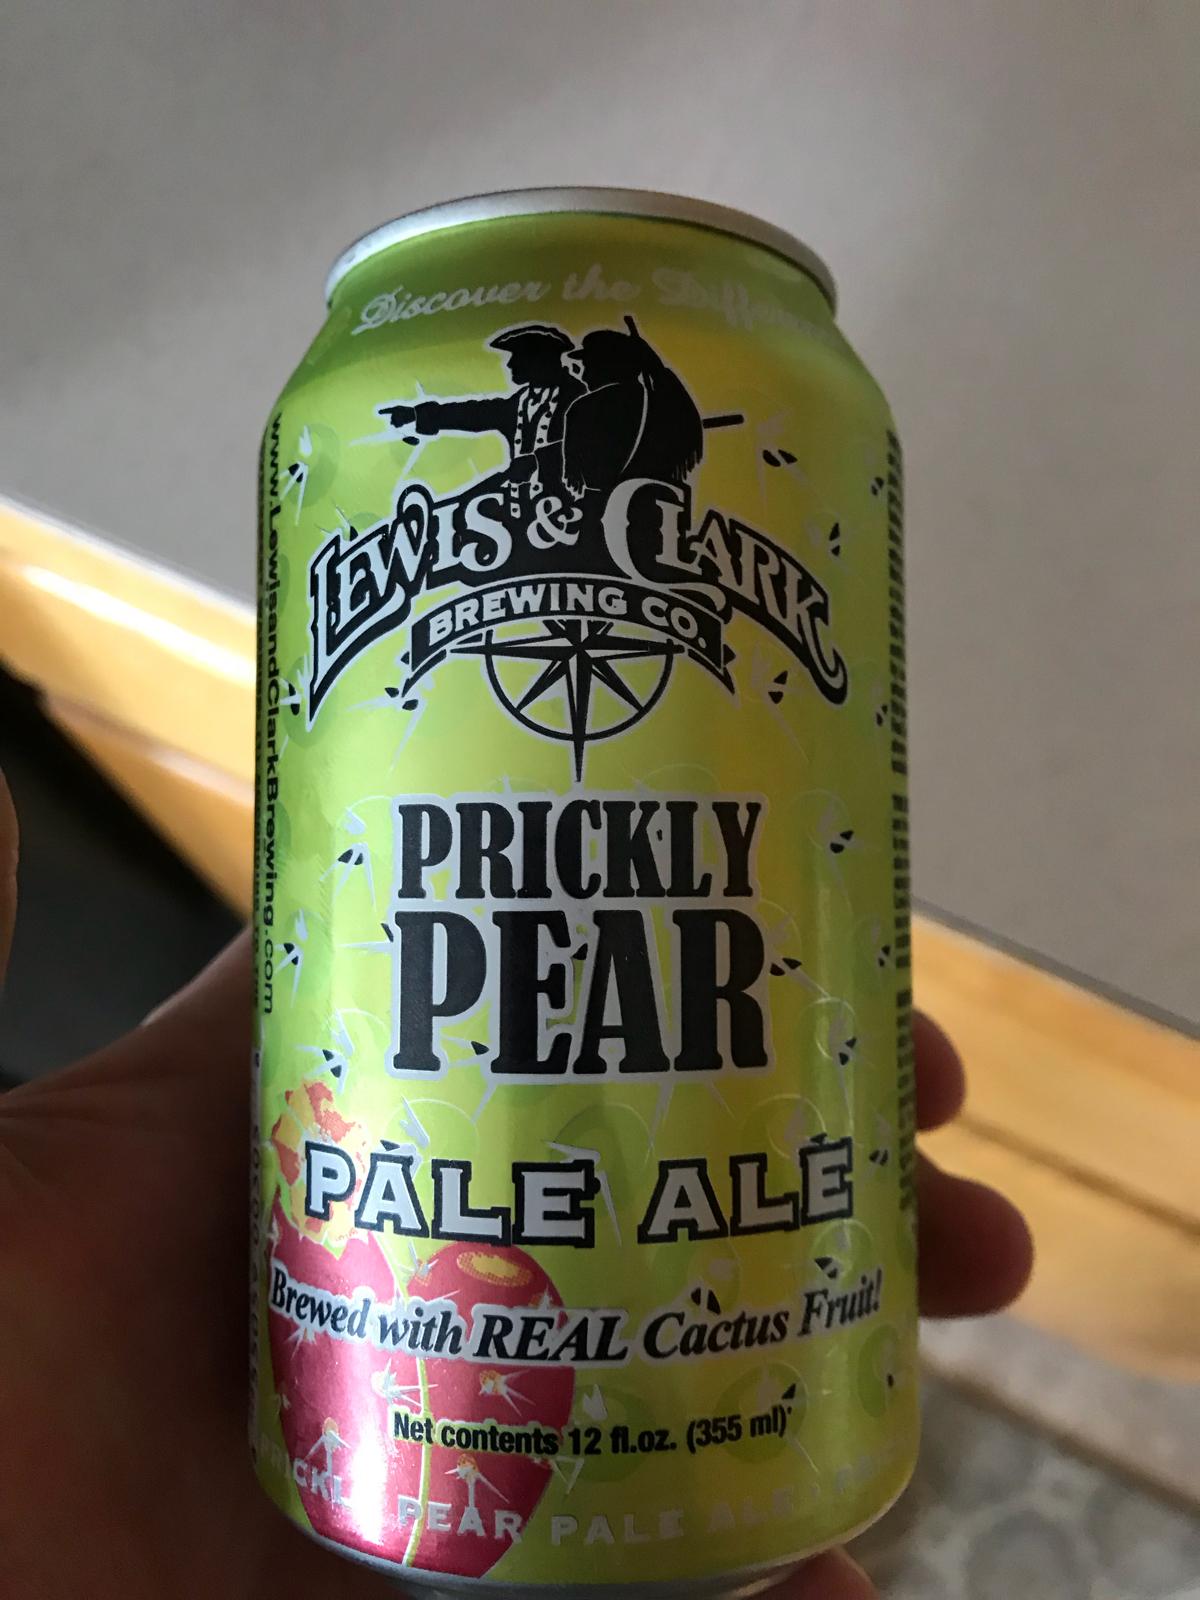 Prickly Pear Pale Ale